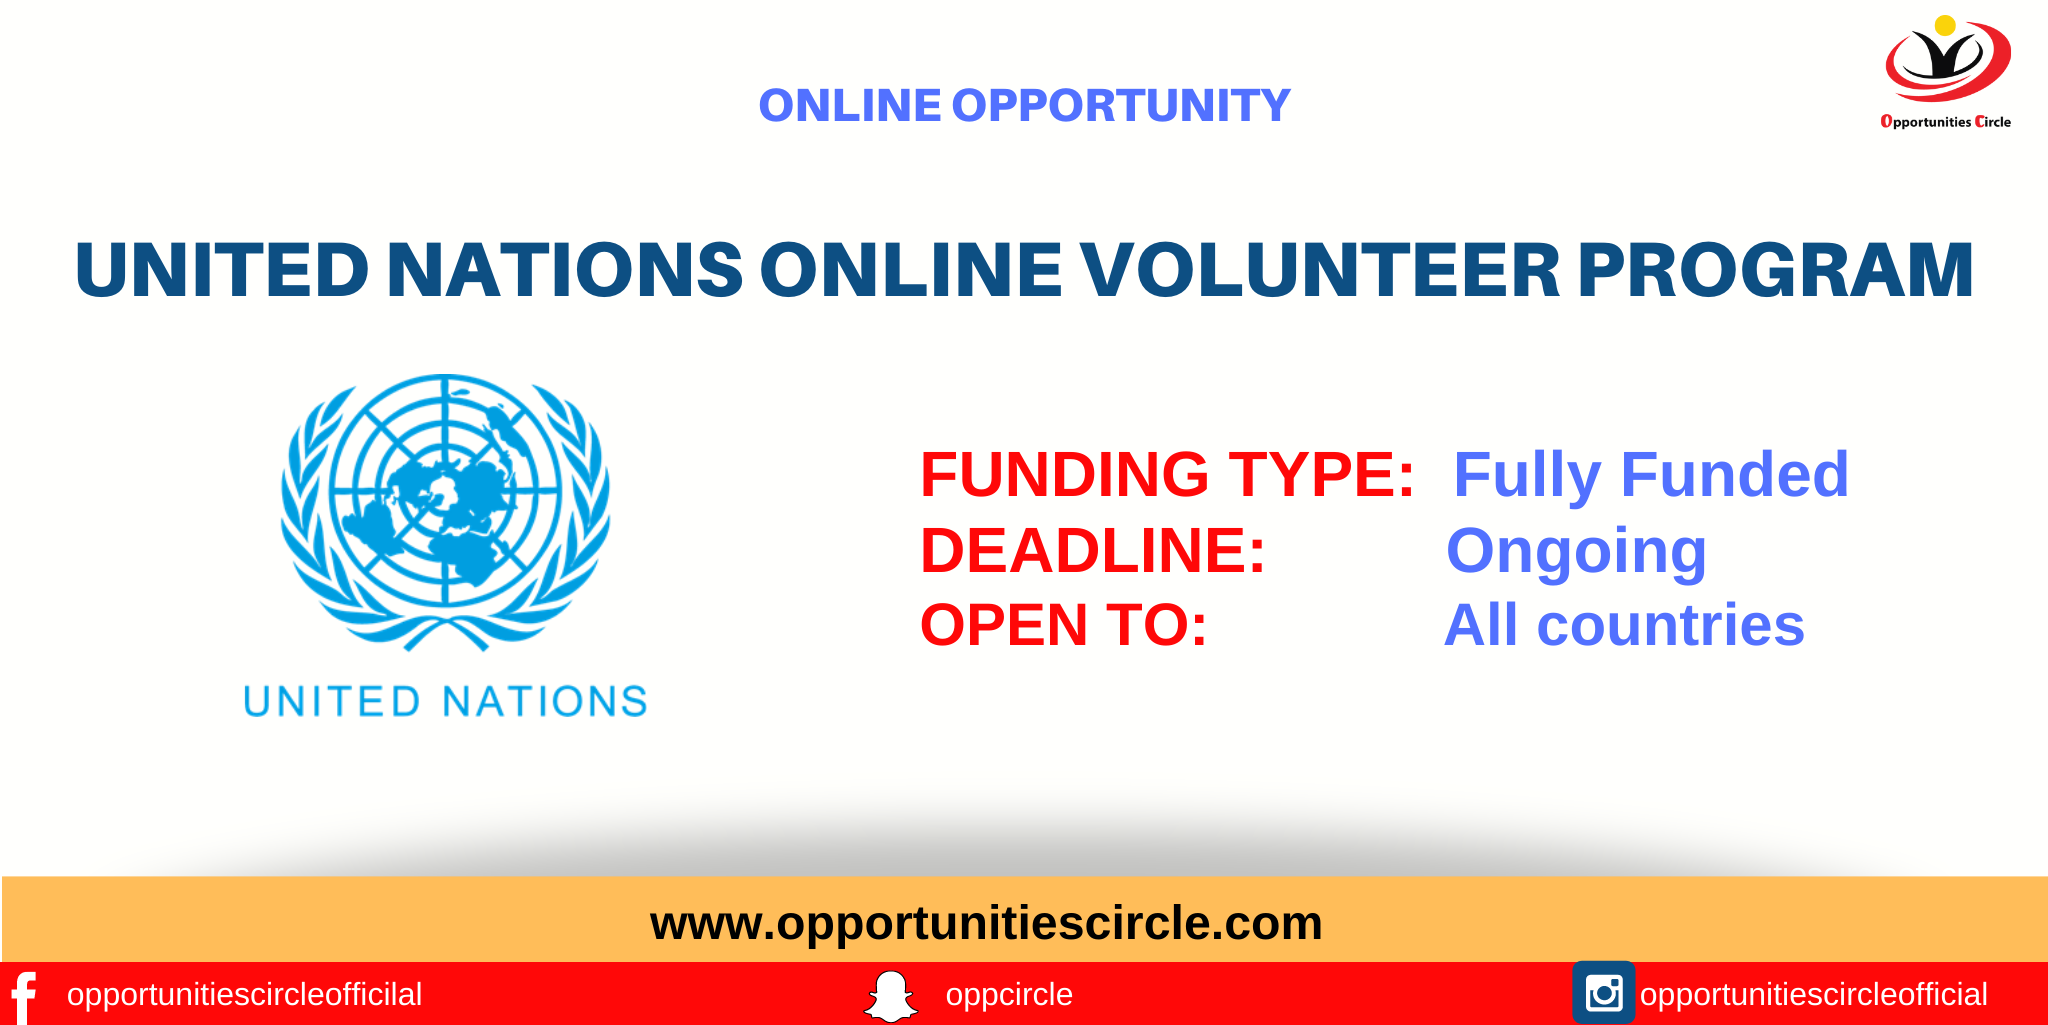 United Nations Online volunteer program 2022 Opportunities Circle